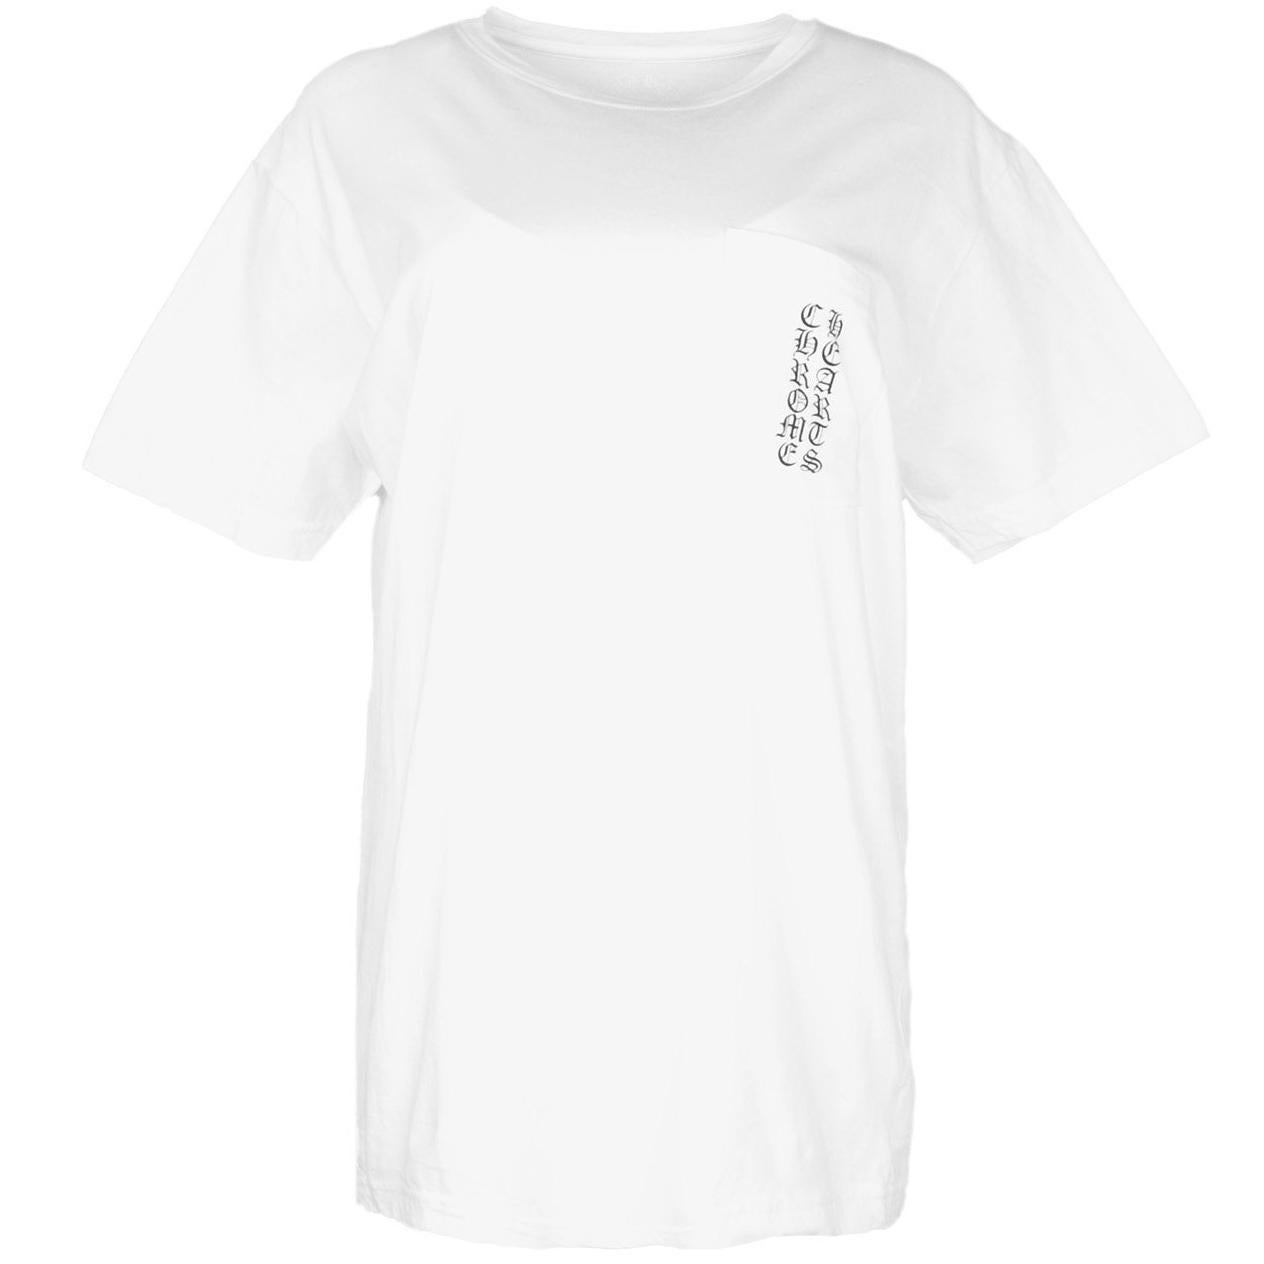 Chrome Hearts Unisex White Pocket T-Shirt W/ Back Logo sz Men's L